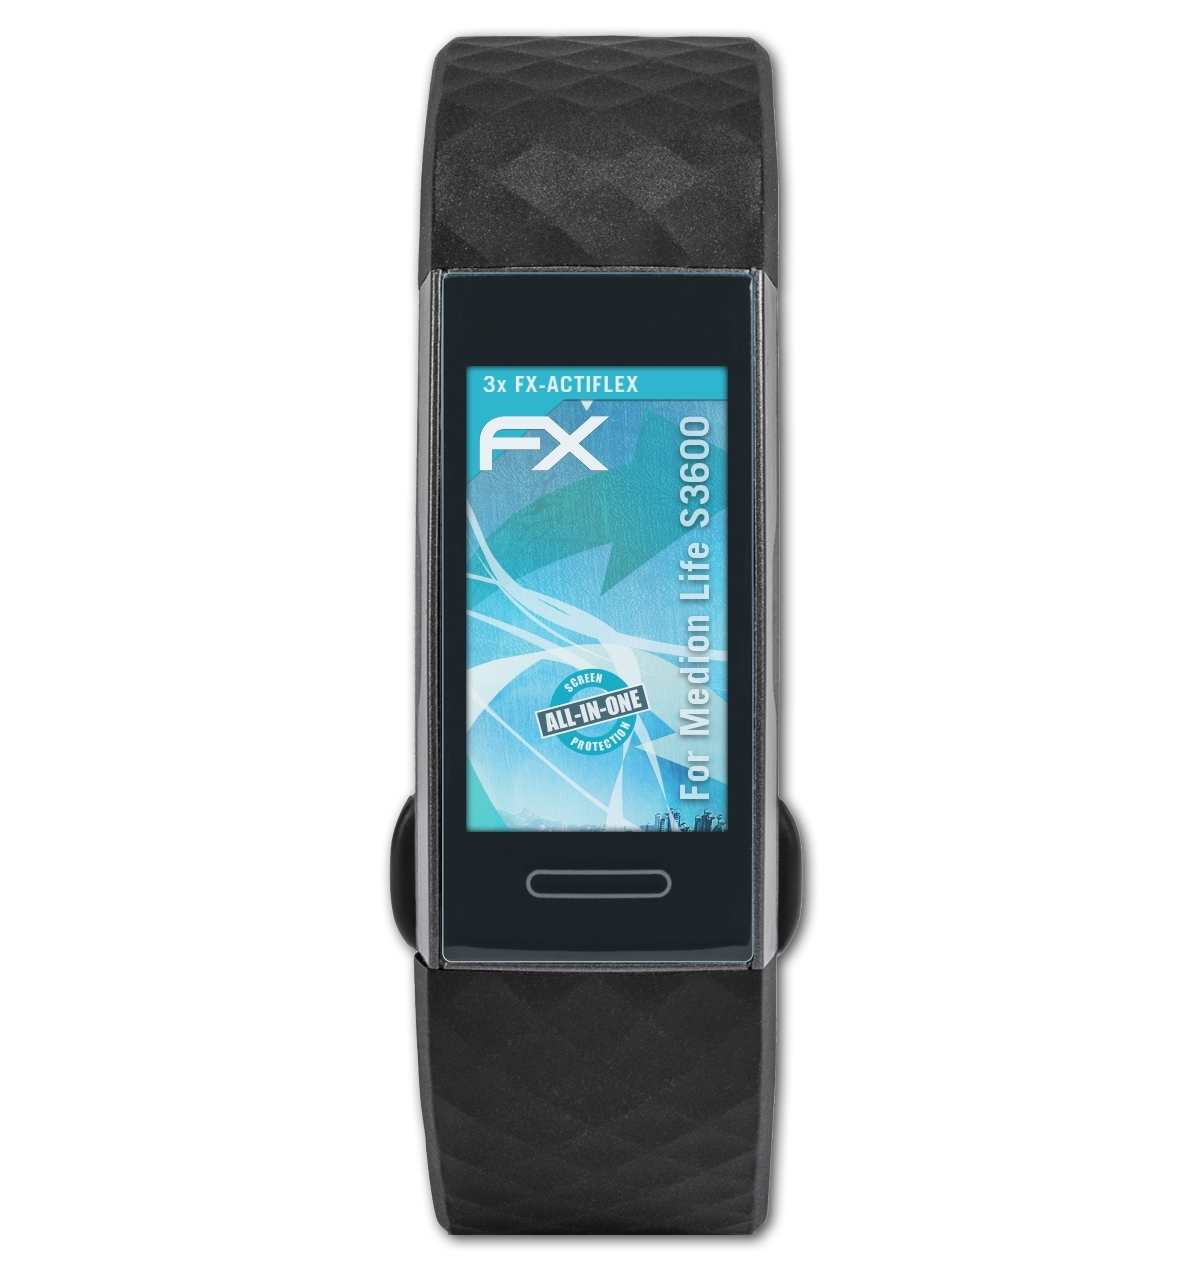 3x S3600) FX-ActiFleX ATFOLIX Medion Displayschutz(für Life